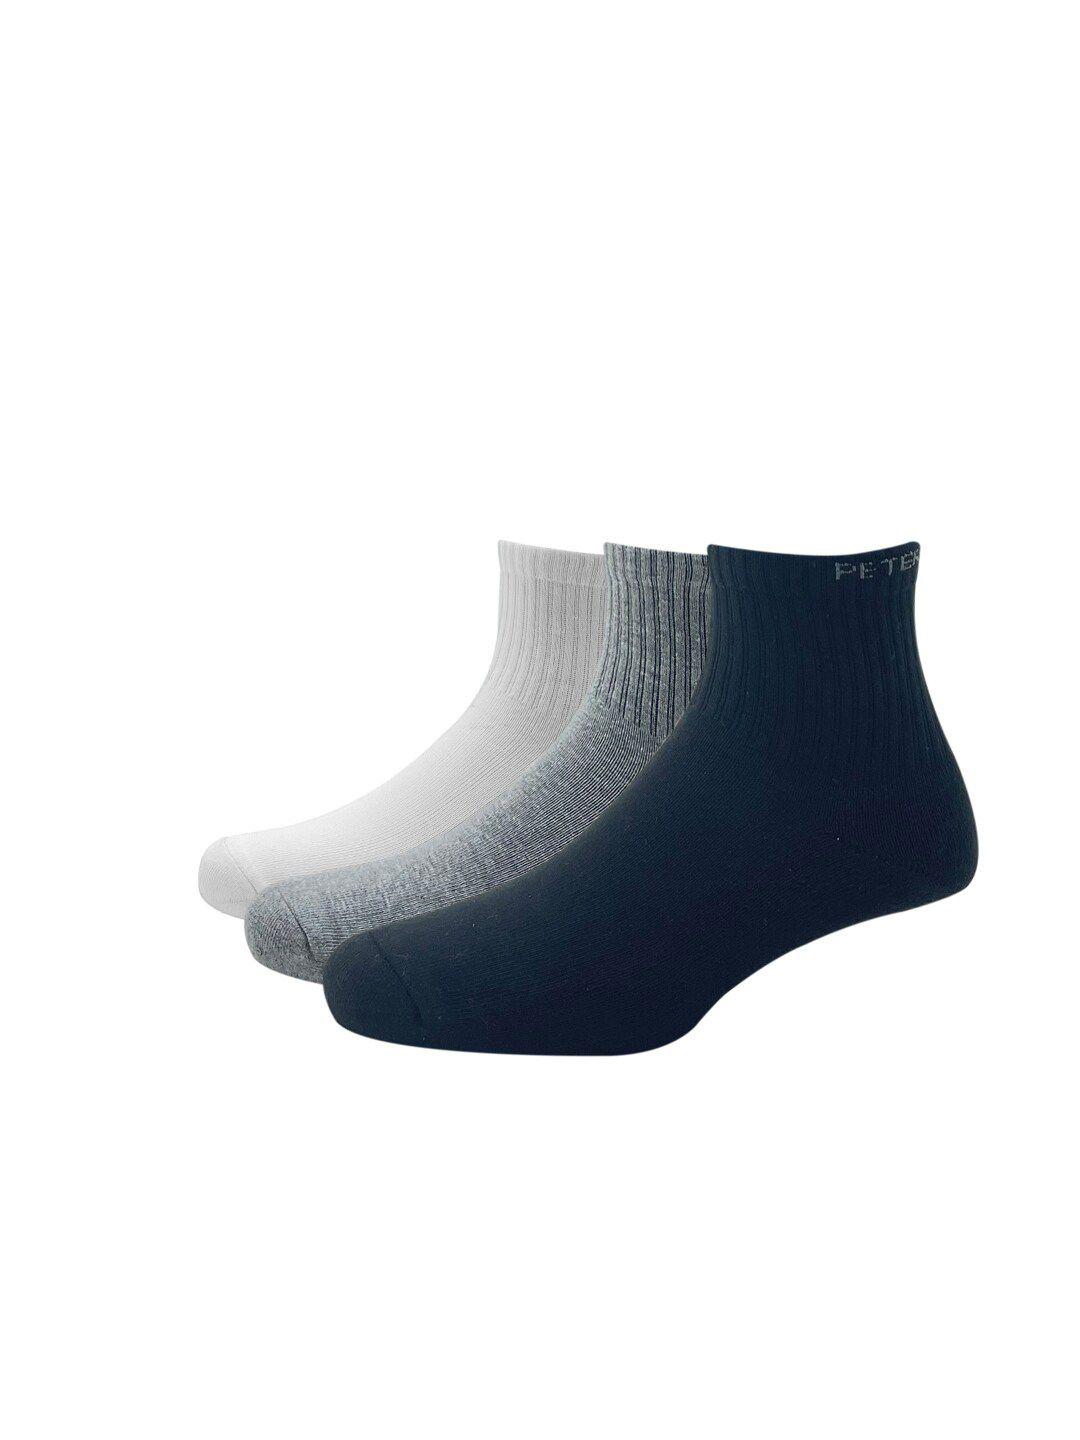 peter-england-men-pack-of-3-solid-above-ankle-length-socks